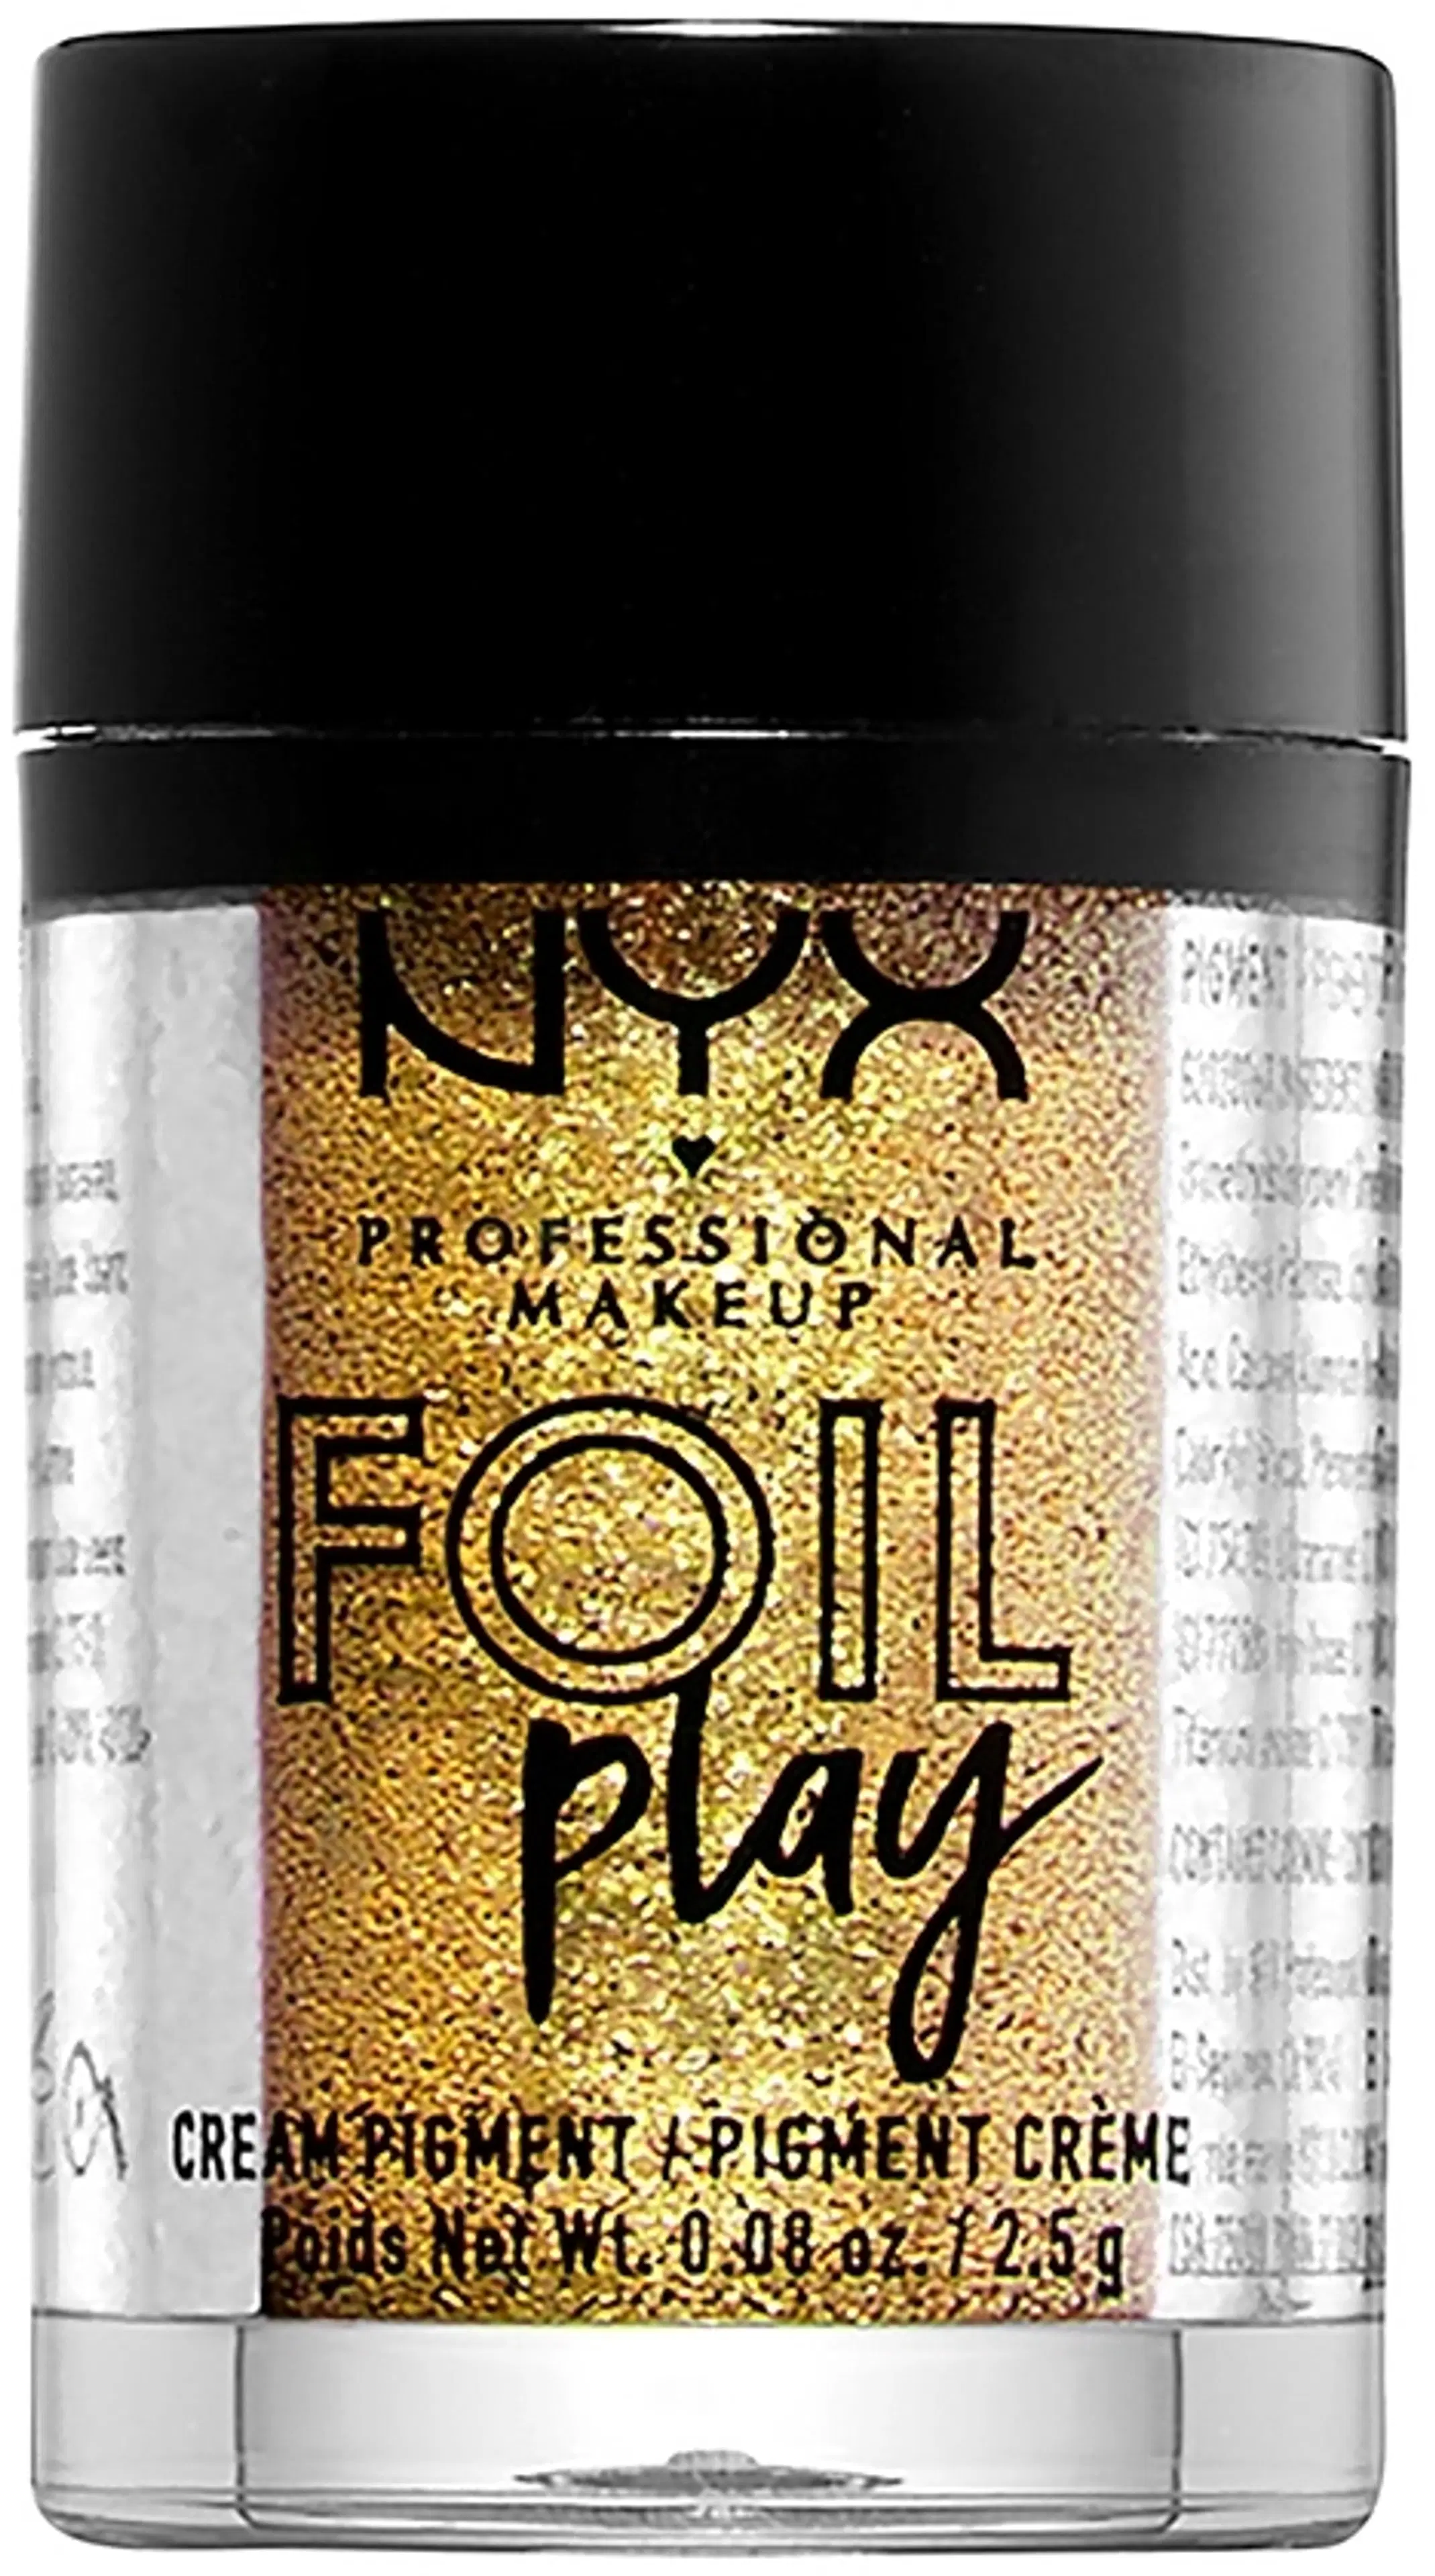 NYX Professional Makeup Foil Play Cream Pigment pigmenttiväri 2,5g